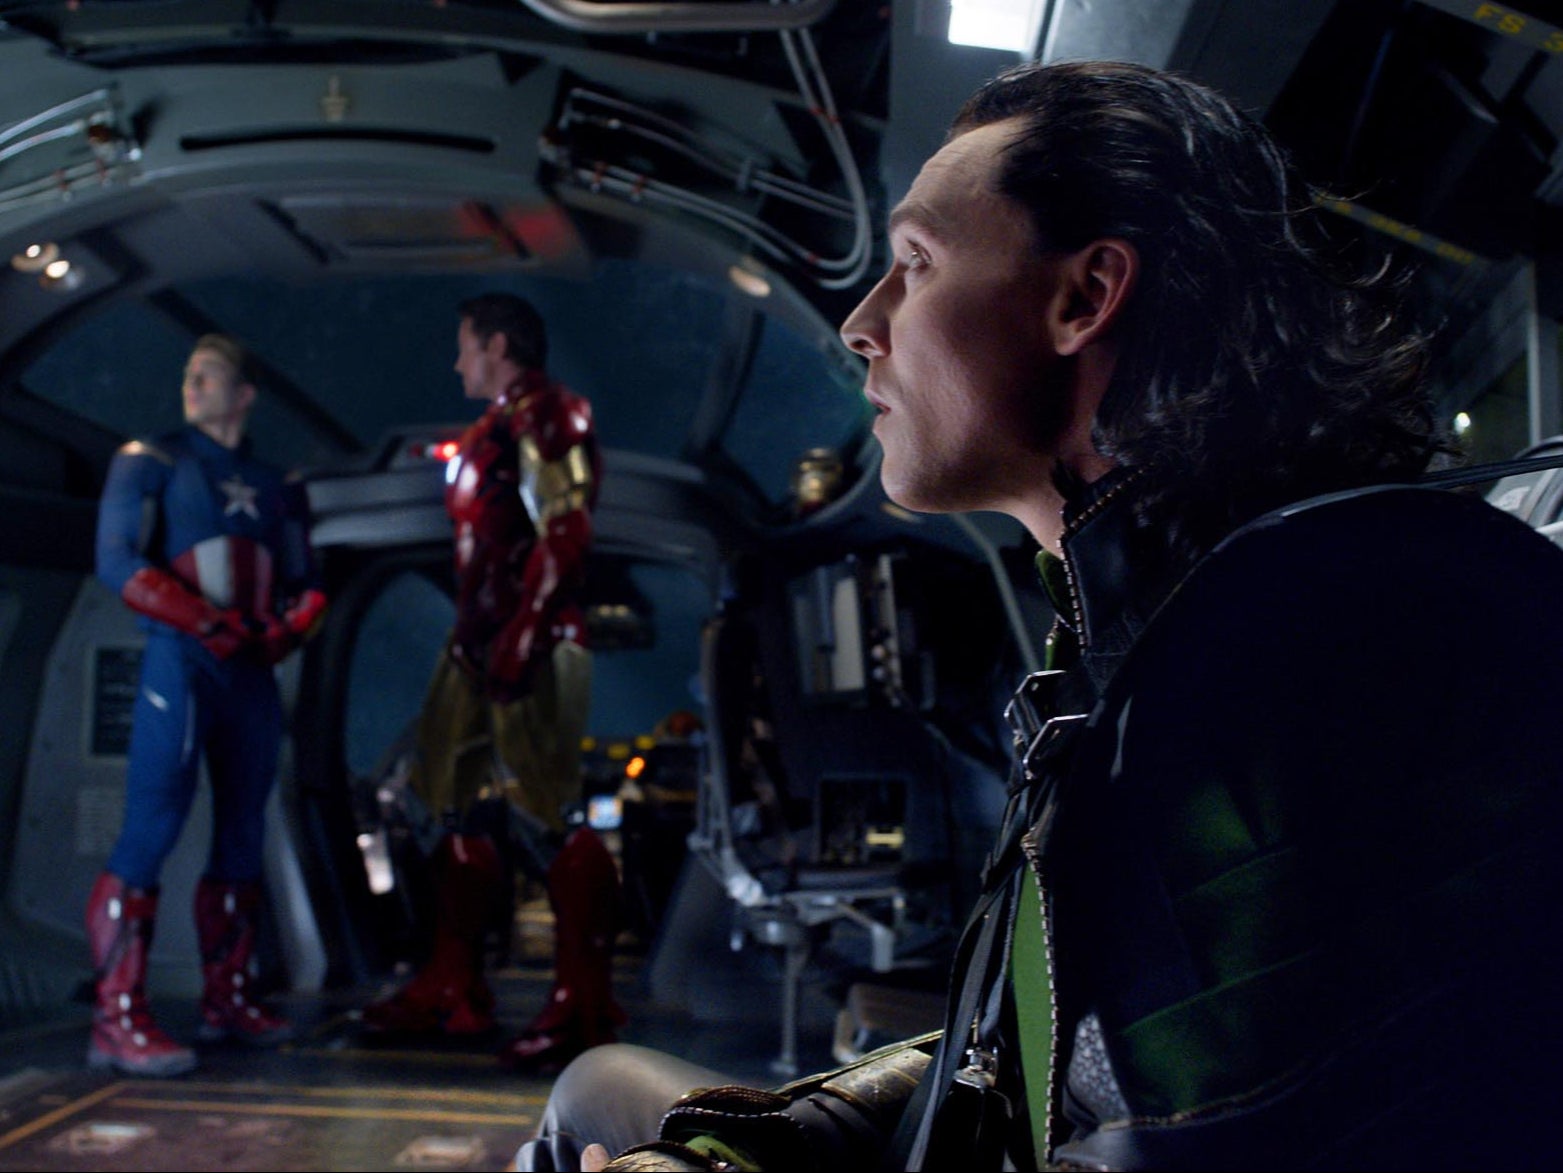 Chris Evans as Captain America, Robert Downey Jr as Iron Man, and Tom Hiddleston as Loki in ‘The Avengers’ (2012)